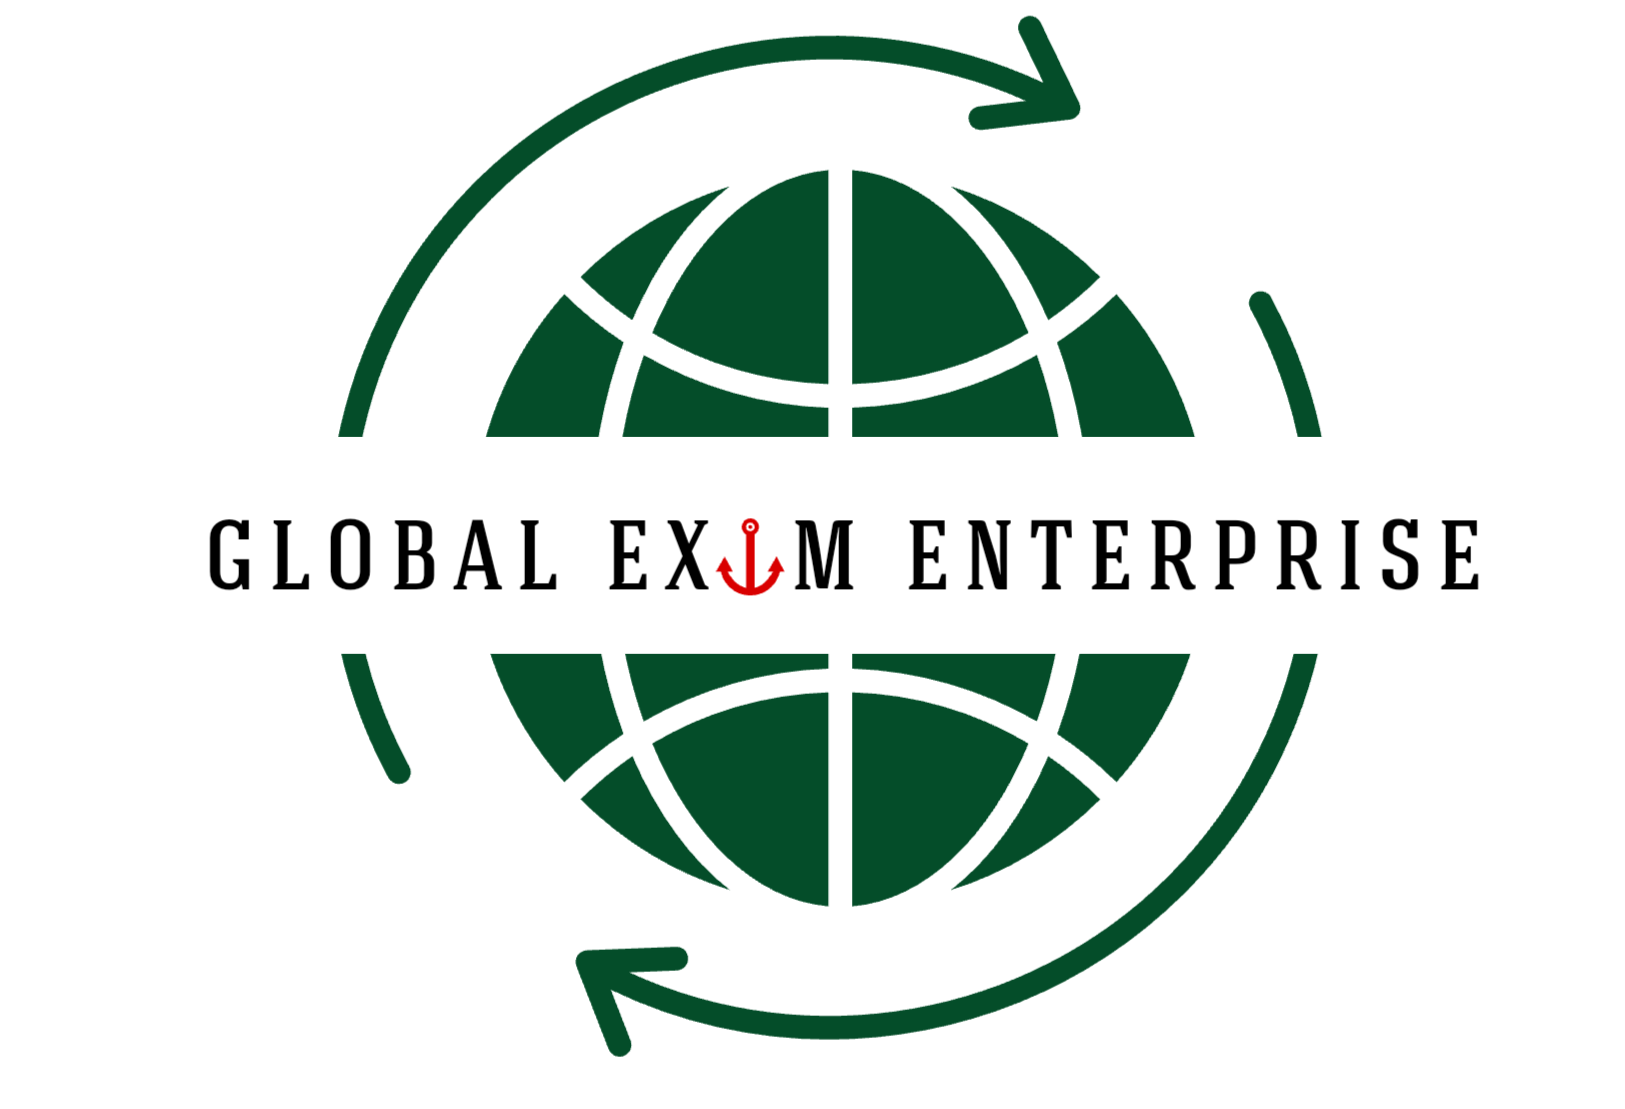 Global Exim Enterprise